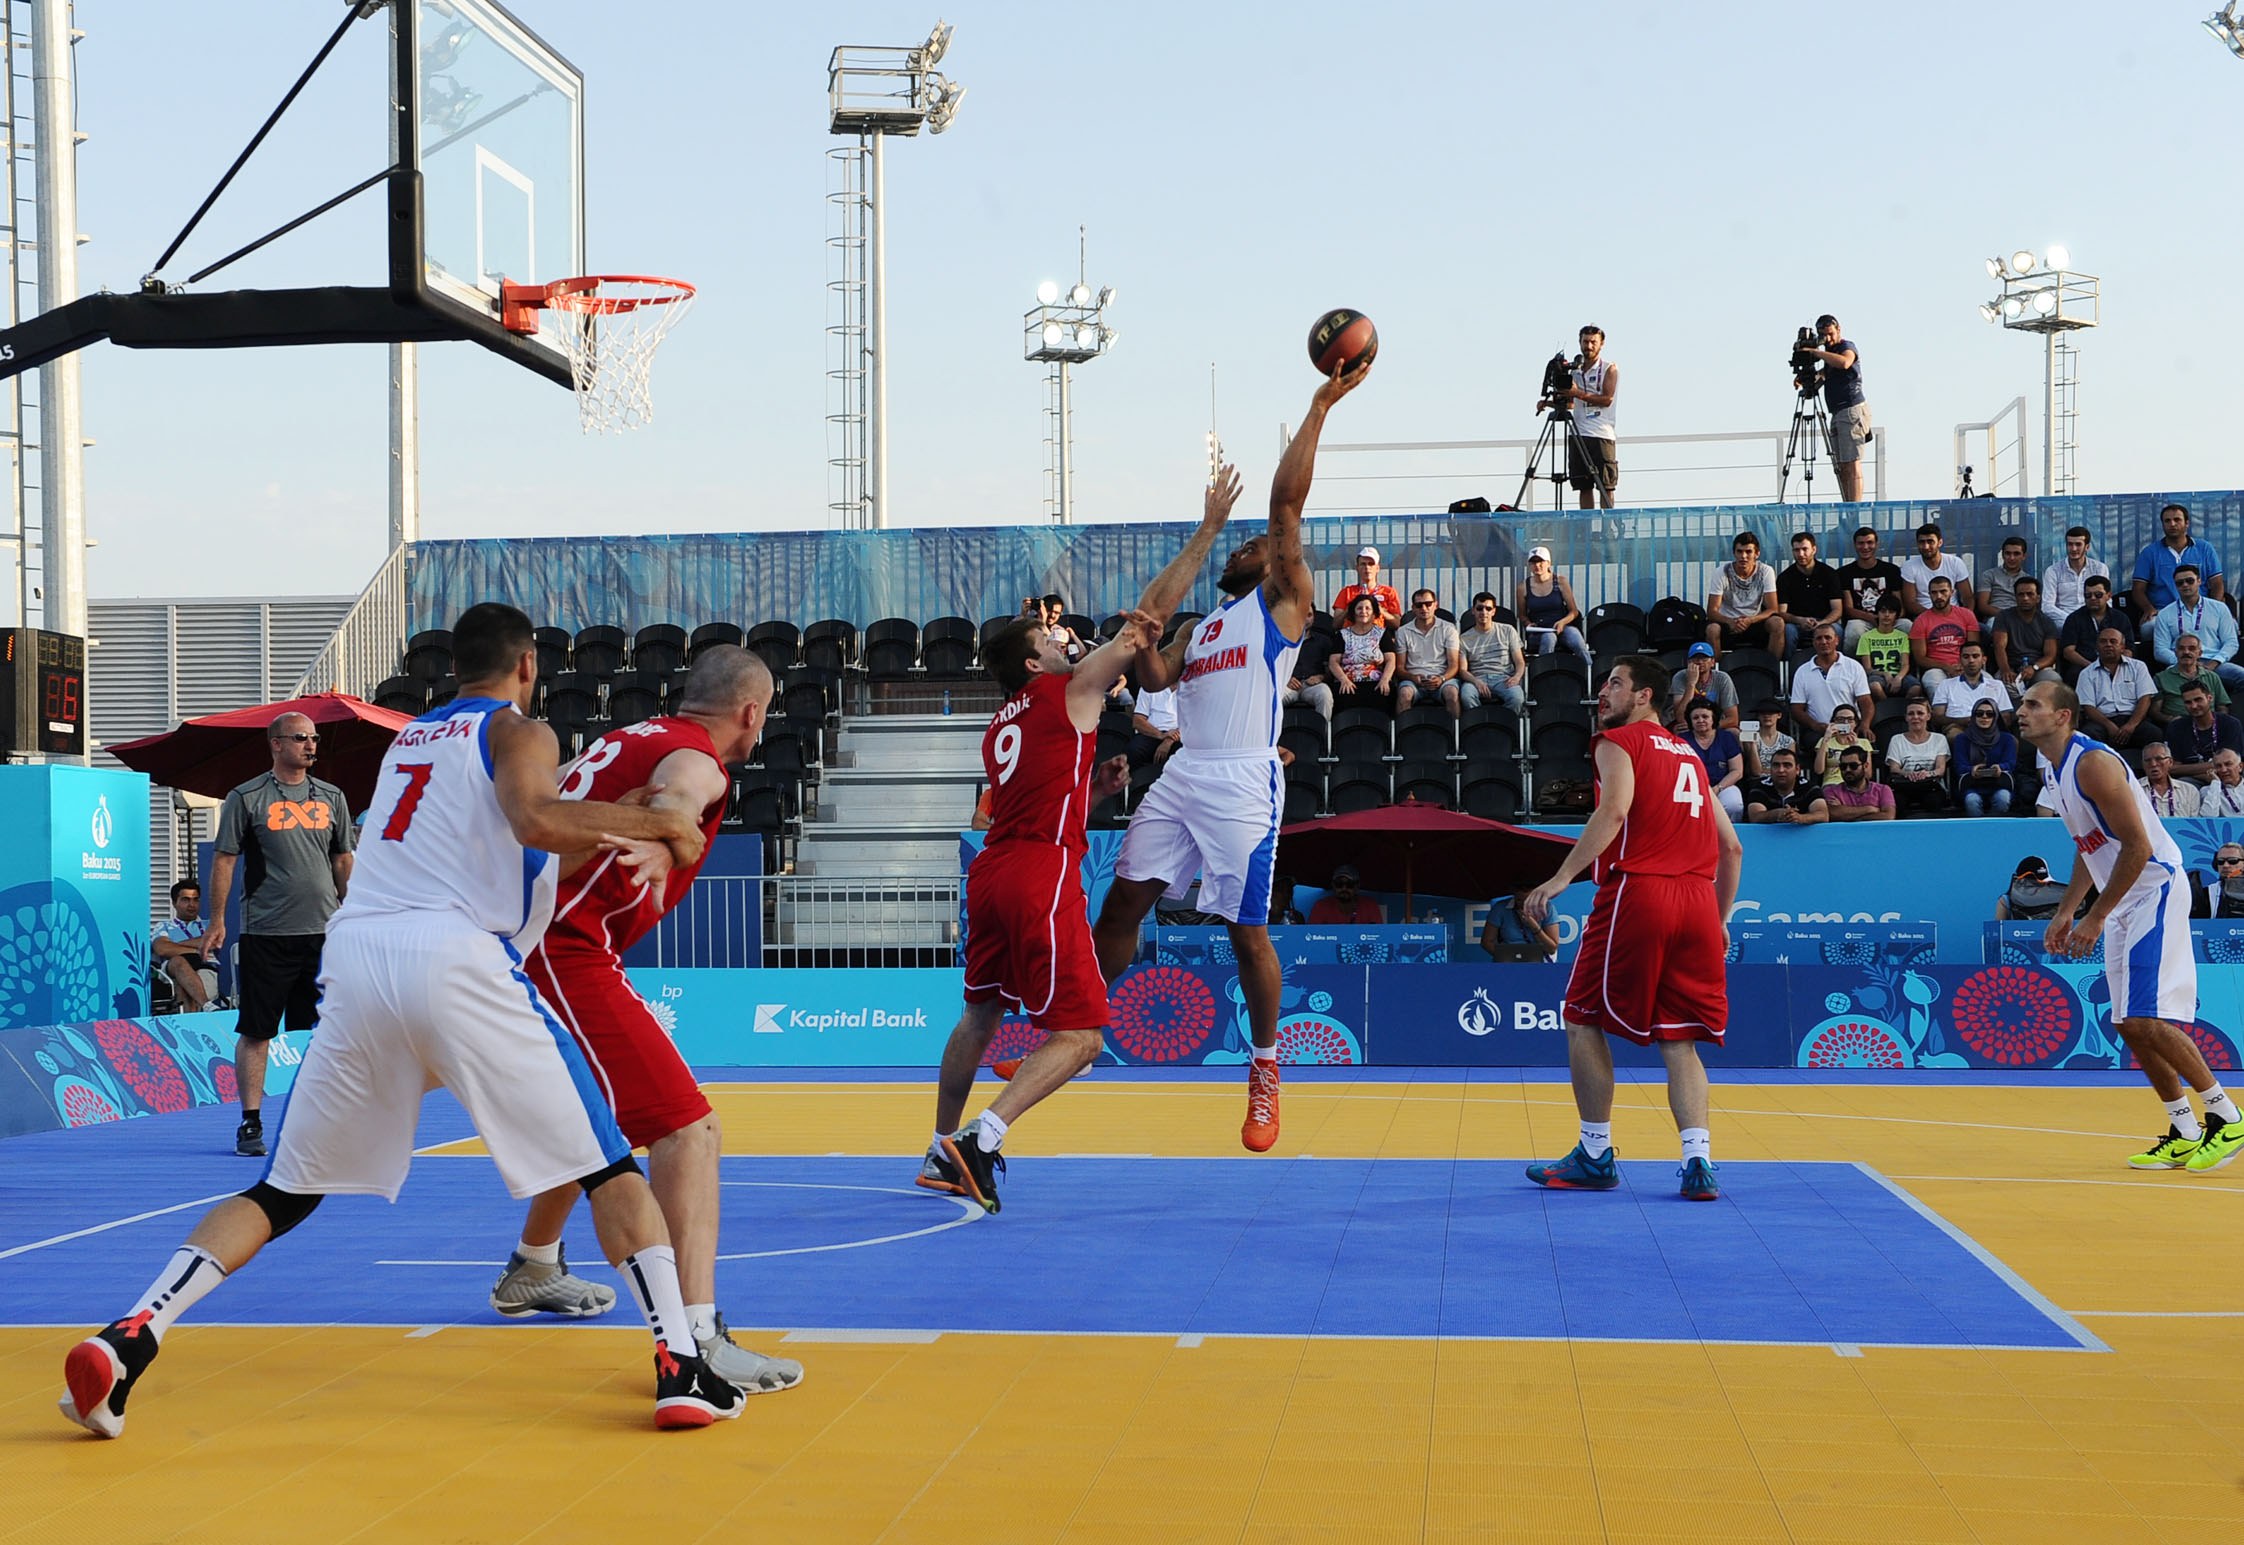 Мужской баскетбол 3 3. Баскетбол 3 на 3. Сборная по баскетболу 3x3. Мужская сборная Азербайджана по баскетболу. Команды по баскетболу в Азербайджане.